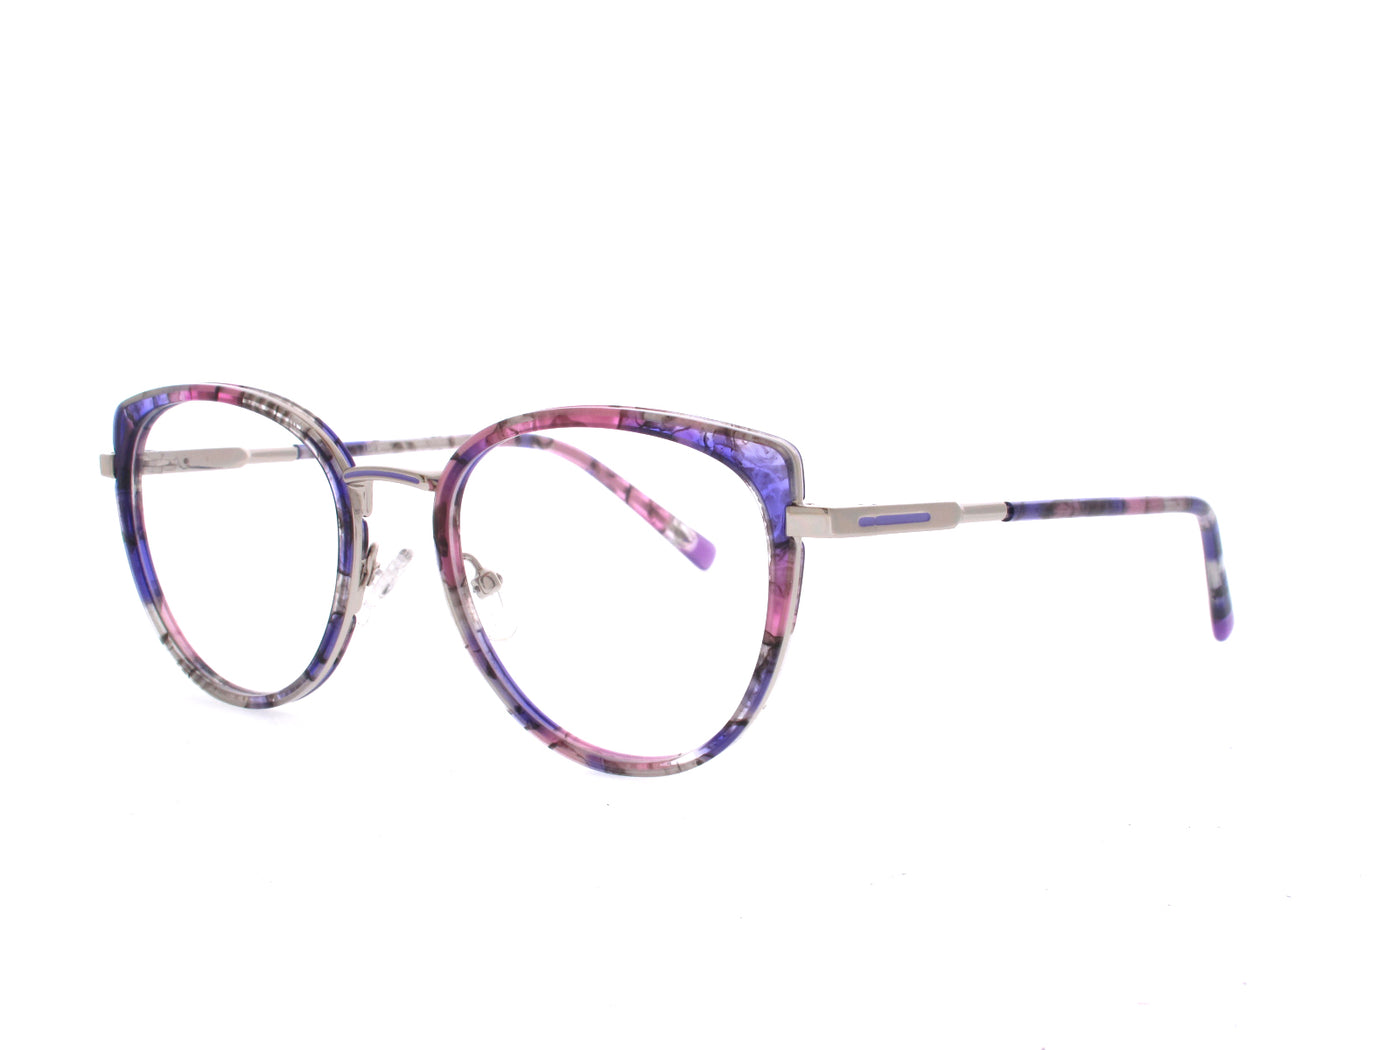 Cateye Glasses 452098